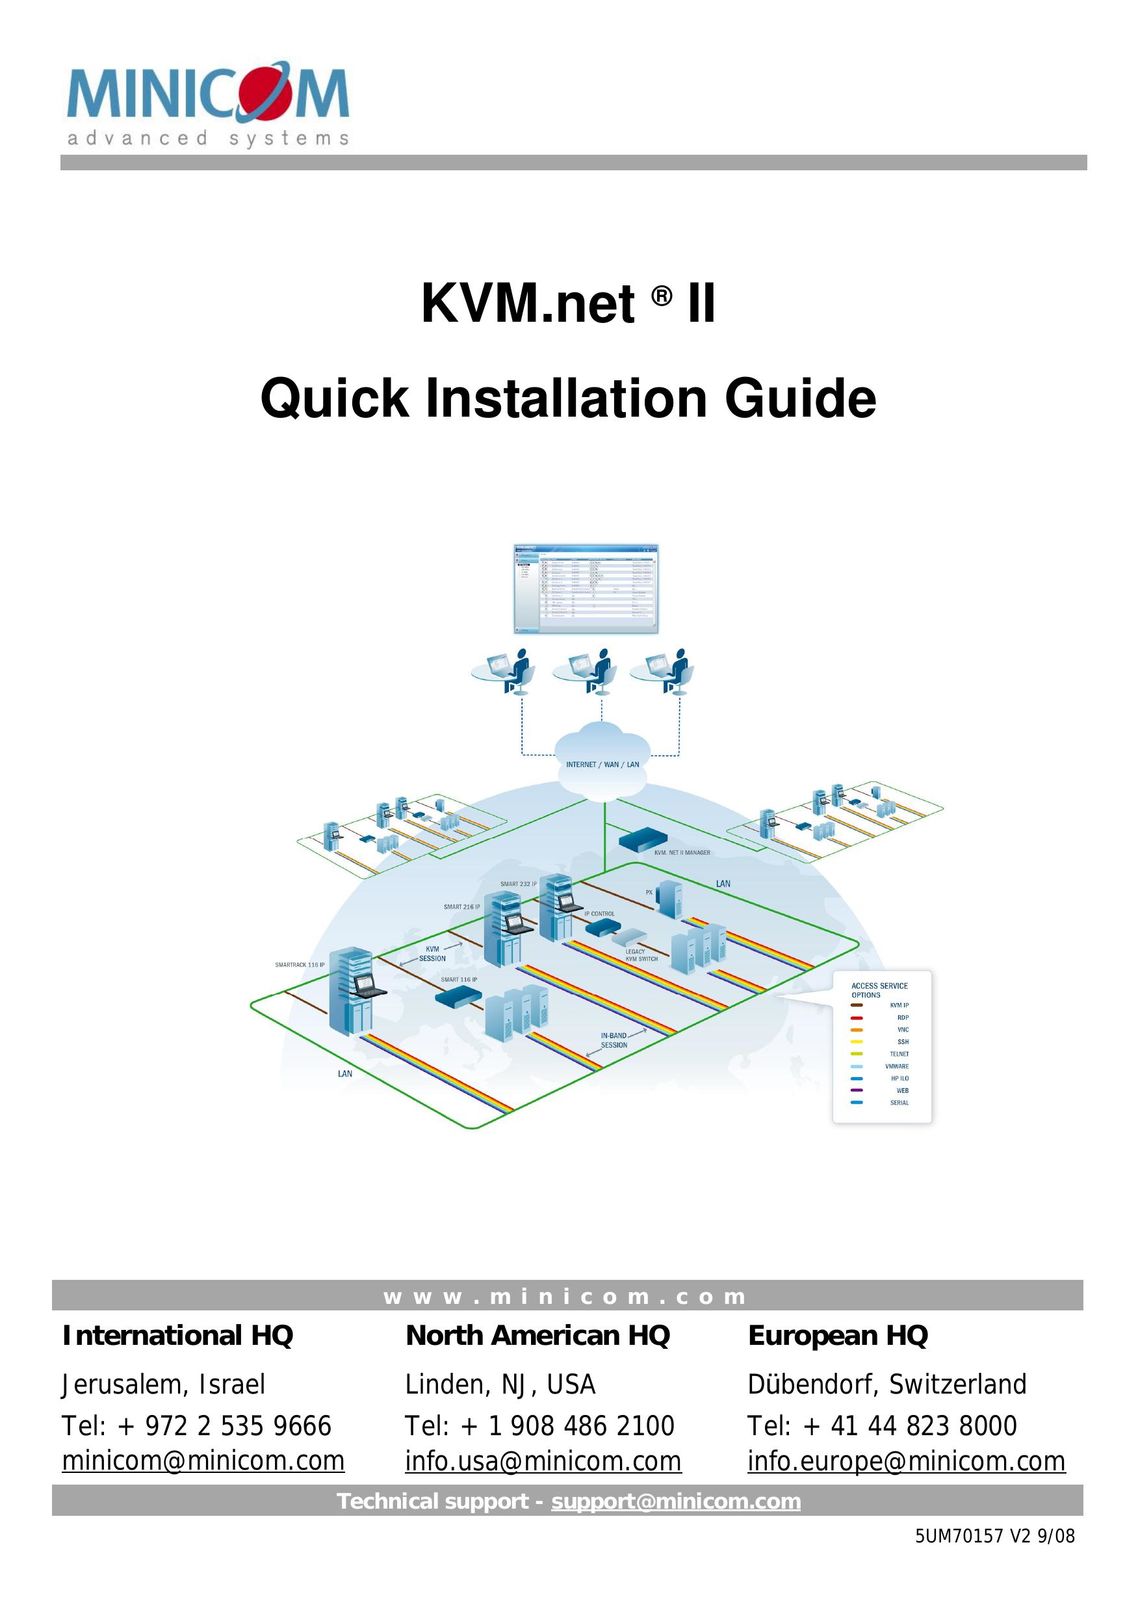 Minicom Advanced Systems KVM.net II Network Card User Manual